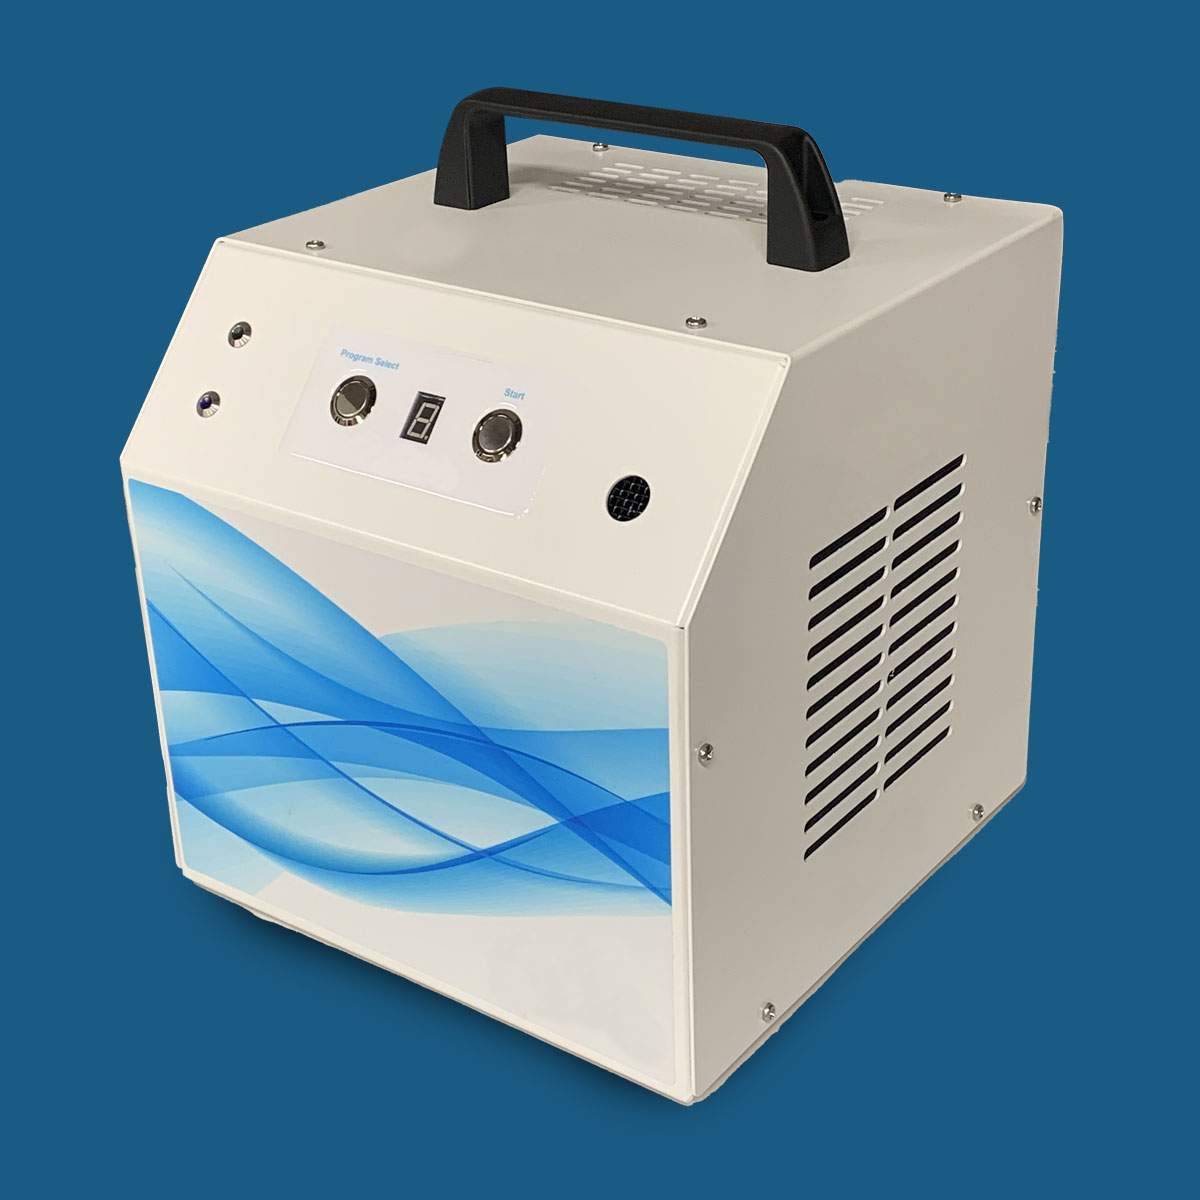 Premier Unit portable ozone generator product against blue background.